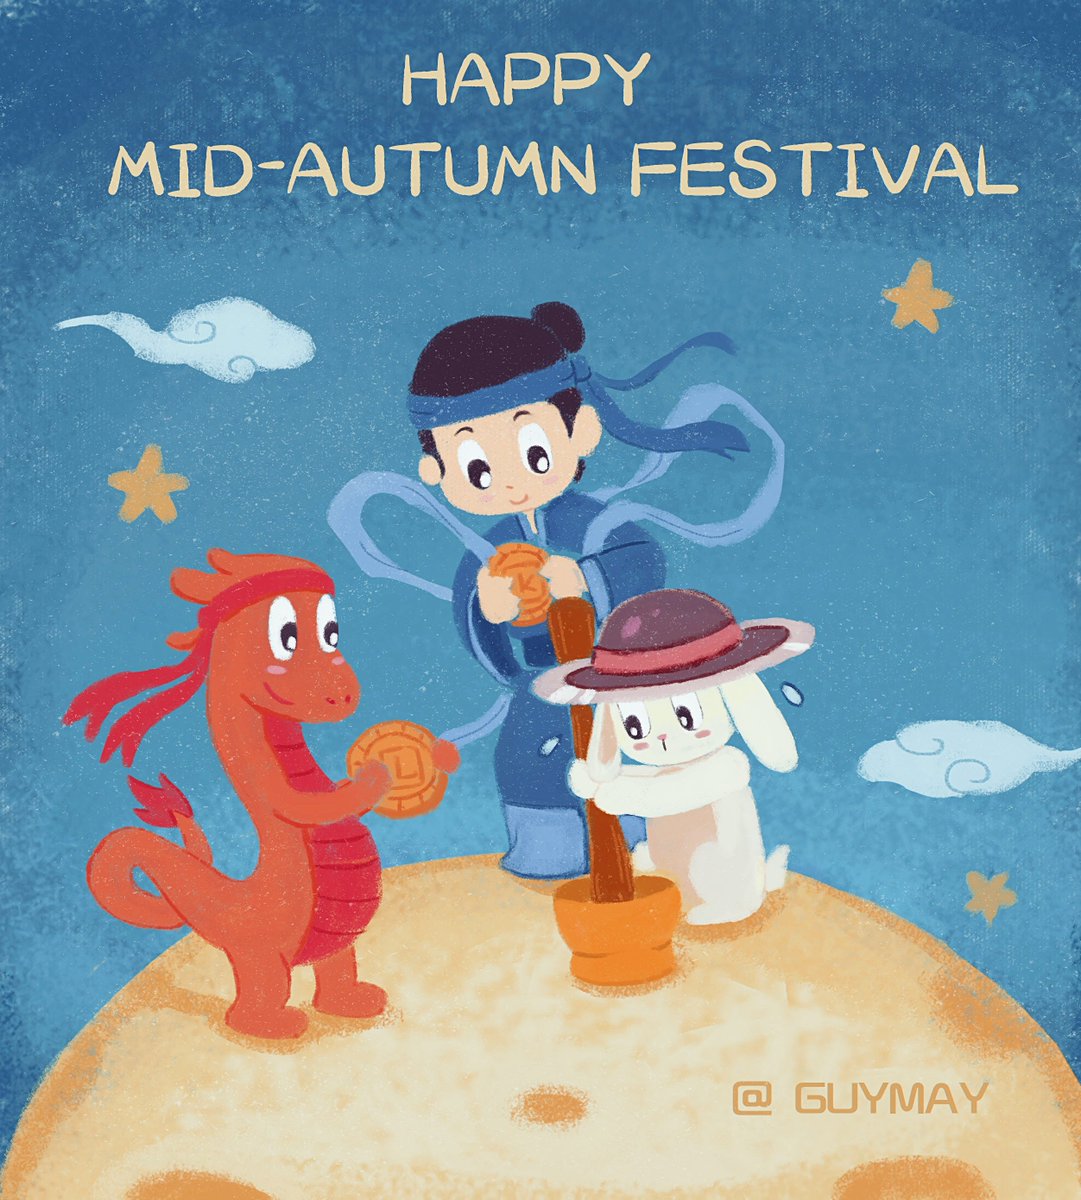 Happy Mid-Autumn Festival ! 中秋快乐!🥮🌕🌟
#midautumnfestival #中秋节 #chinesefestival #mooncake #mortalkombat #Liukang #kitana #kunglao #animality #rabbit #dragon #games #netherrealmstudios #chibi